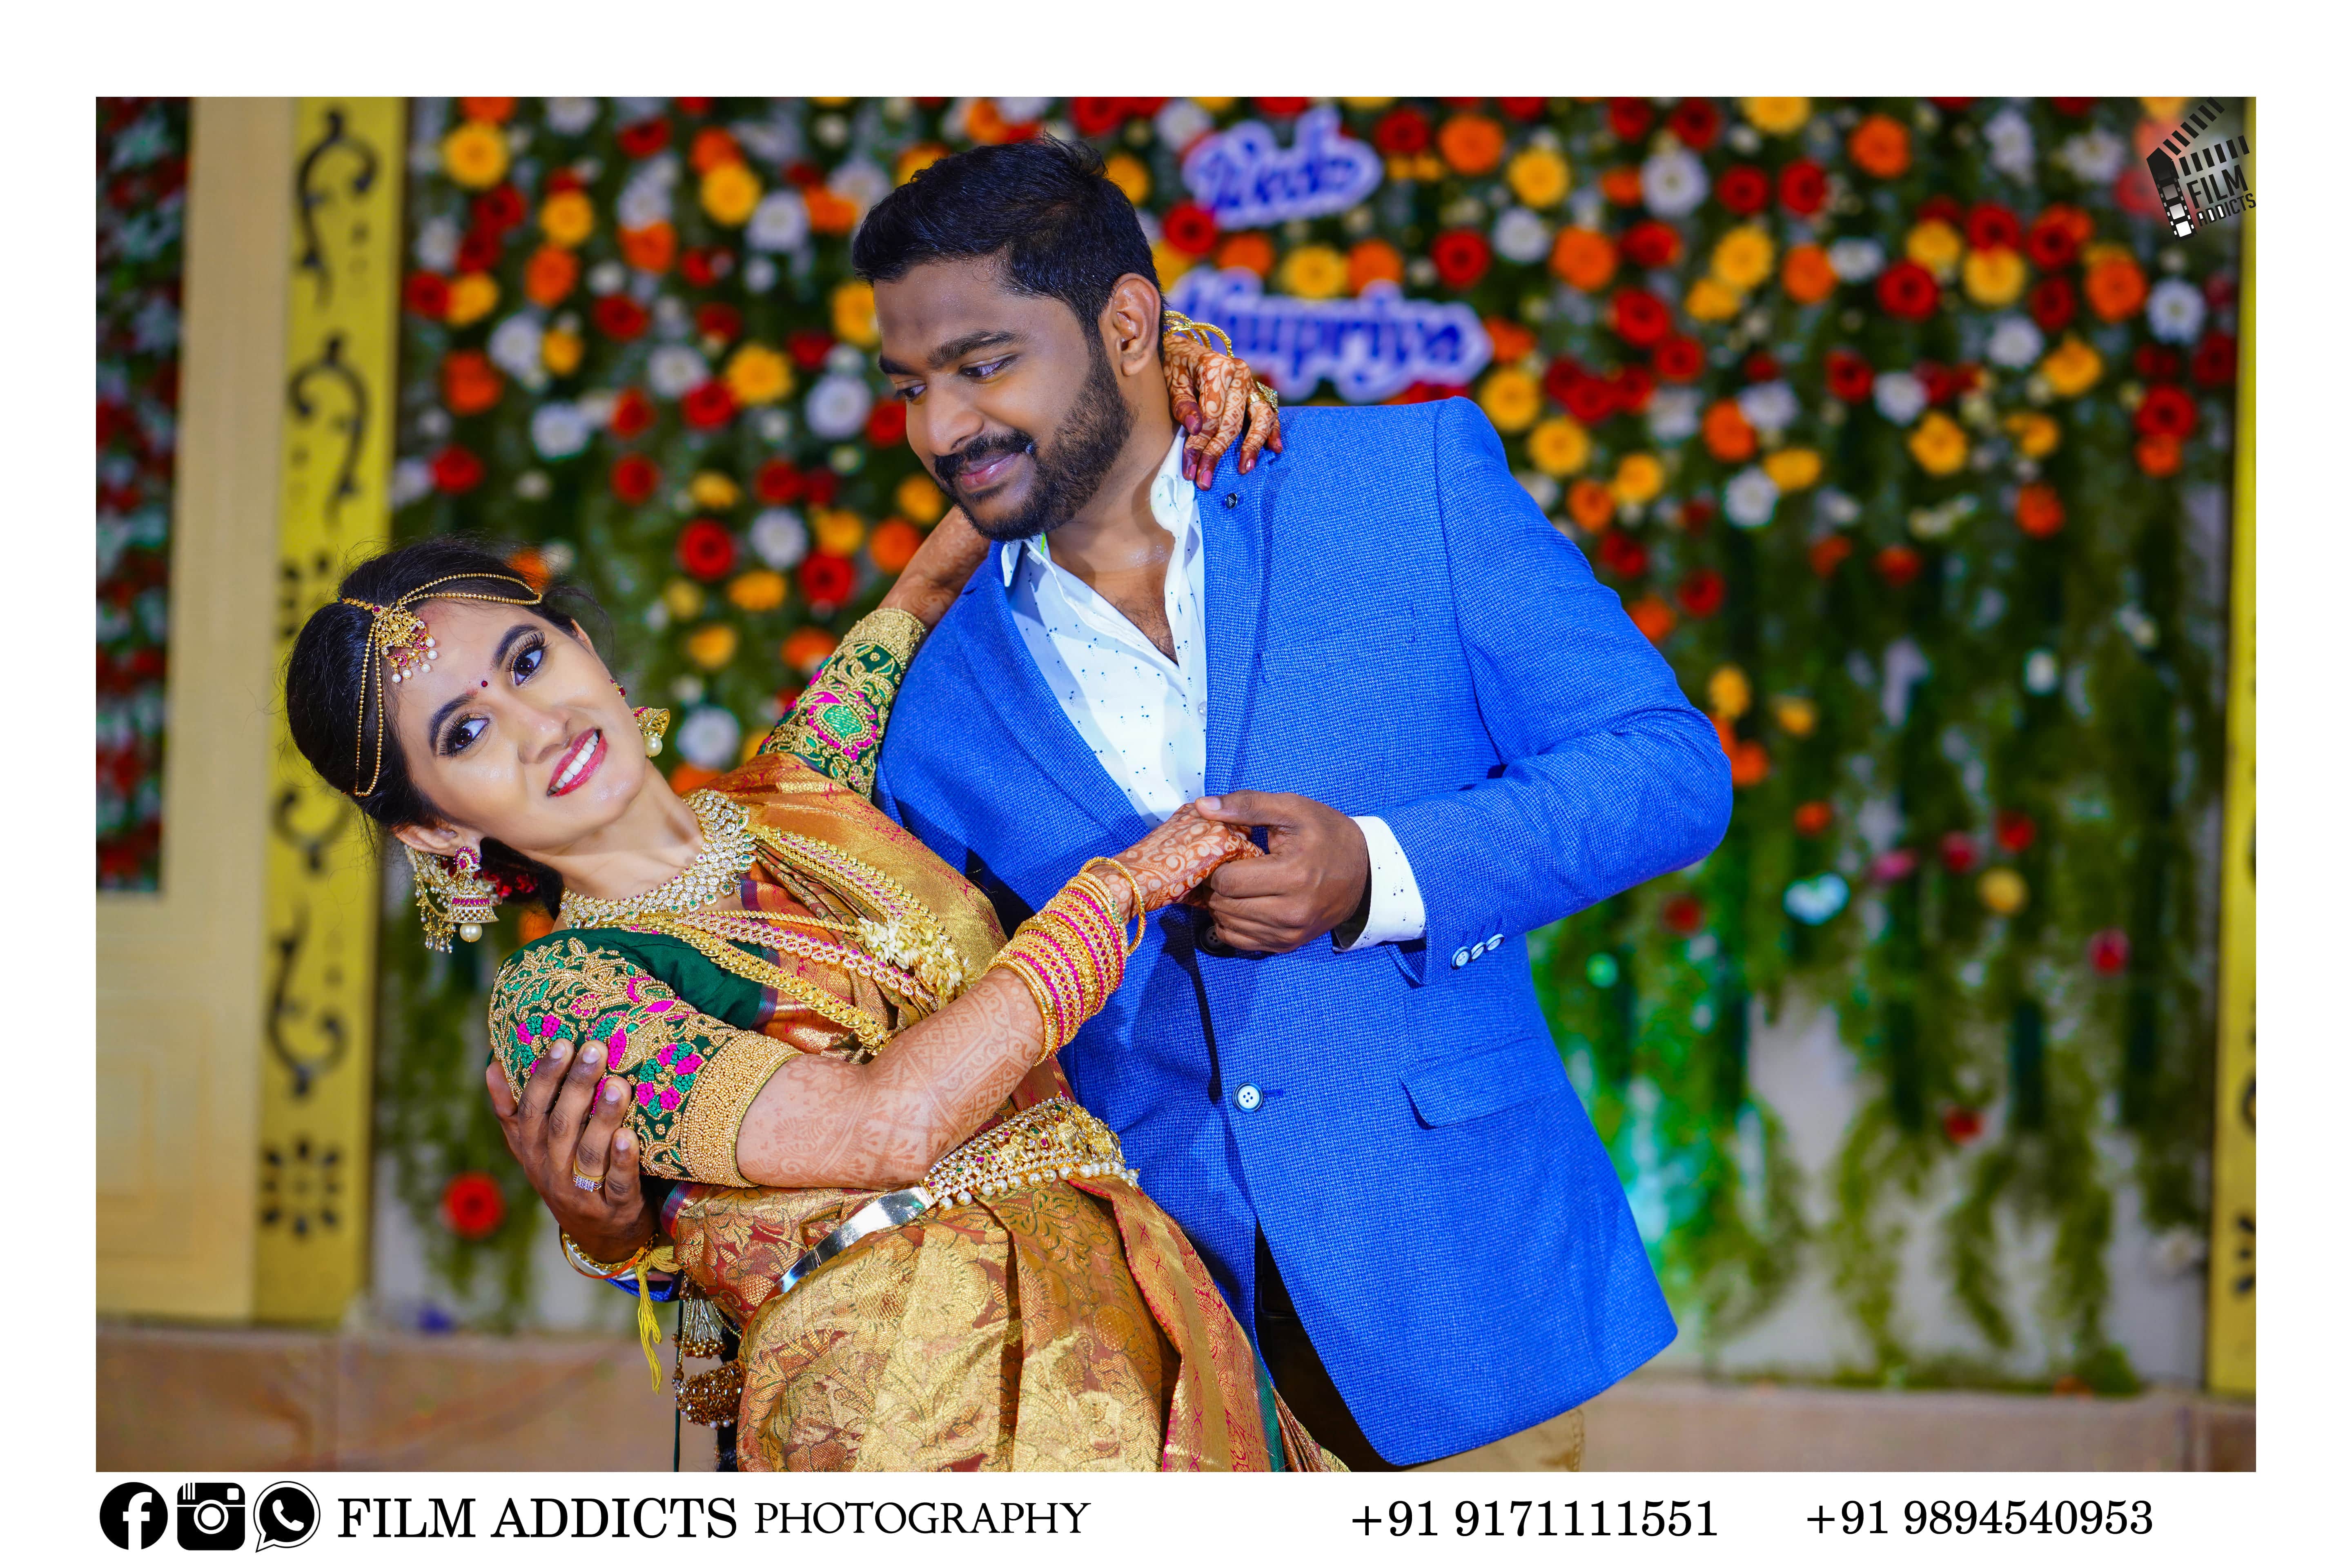 Indian Wedding Photographer / Experienced in Indian Weddings